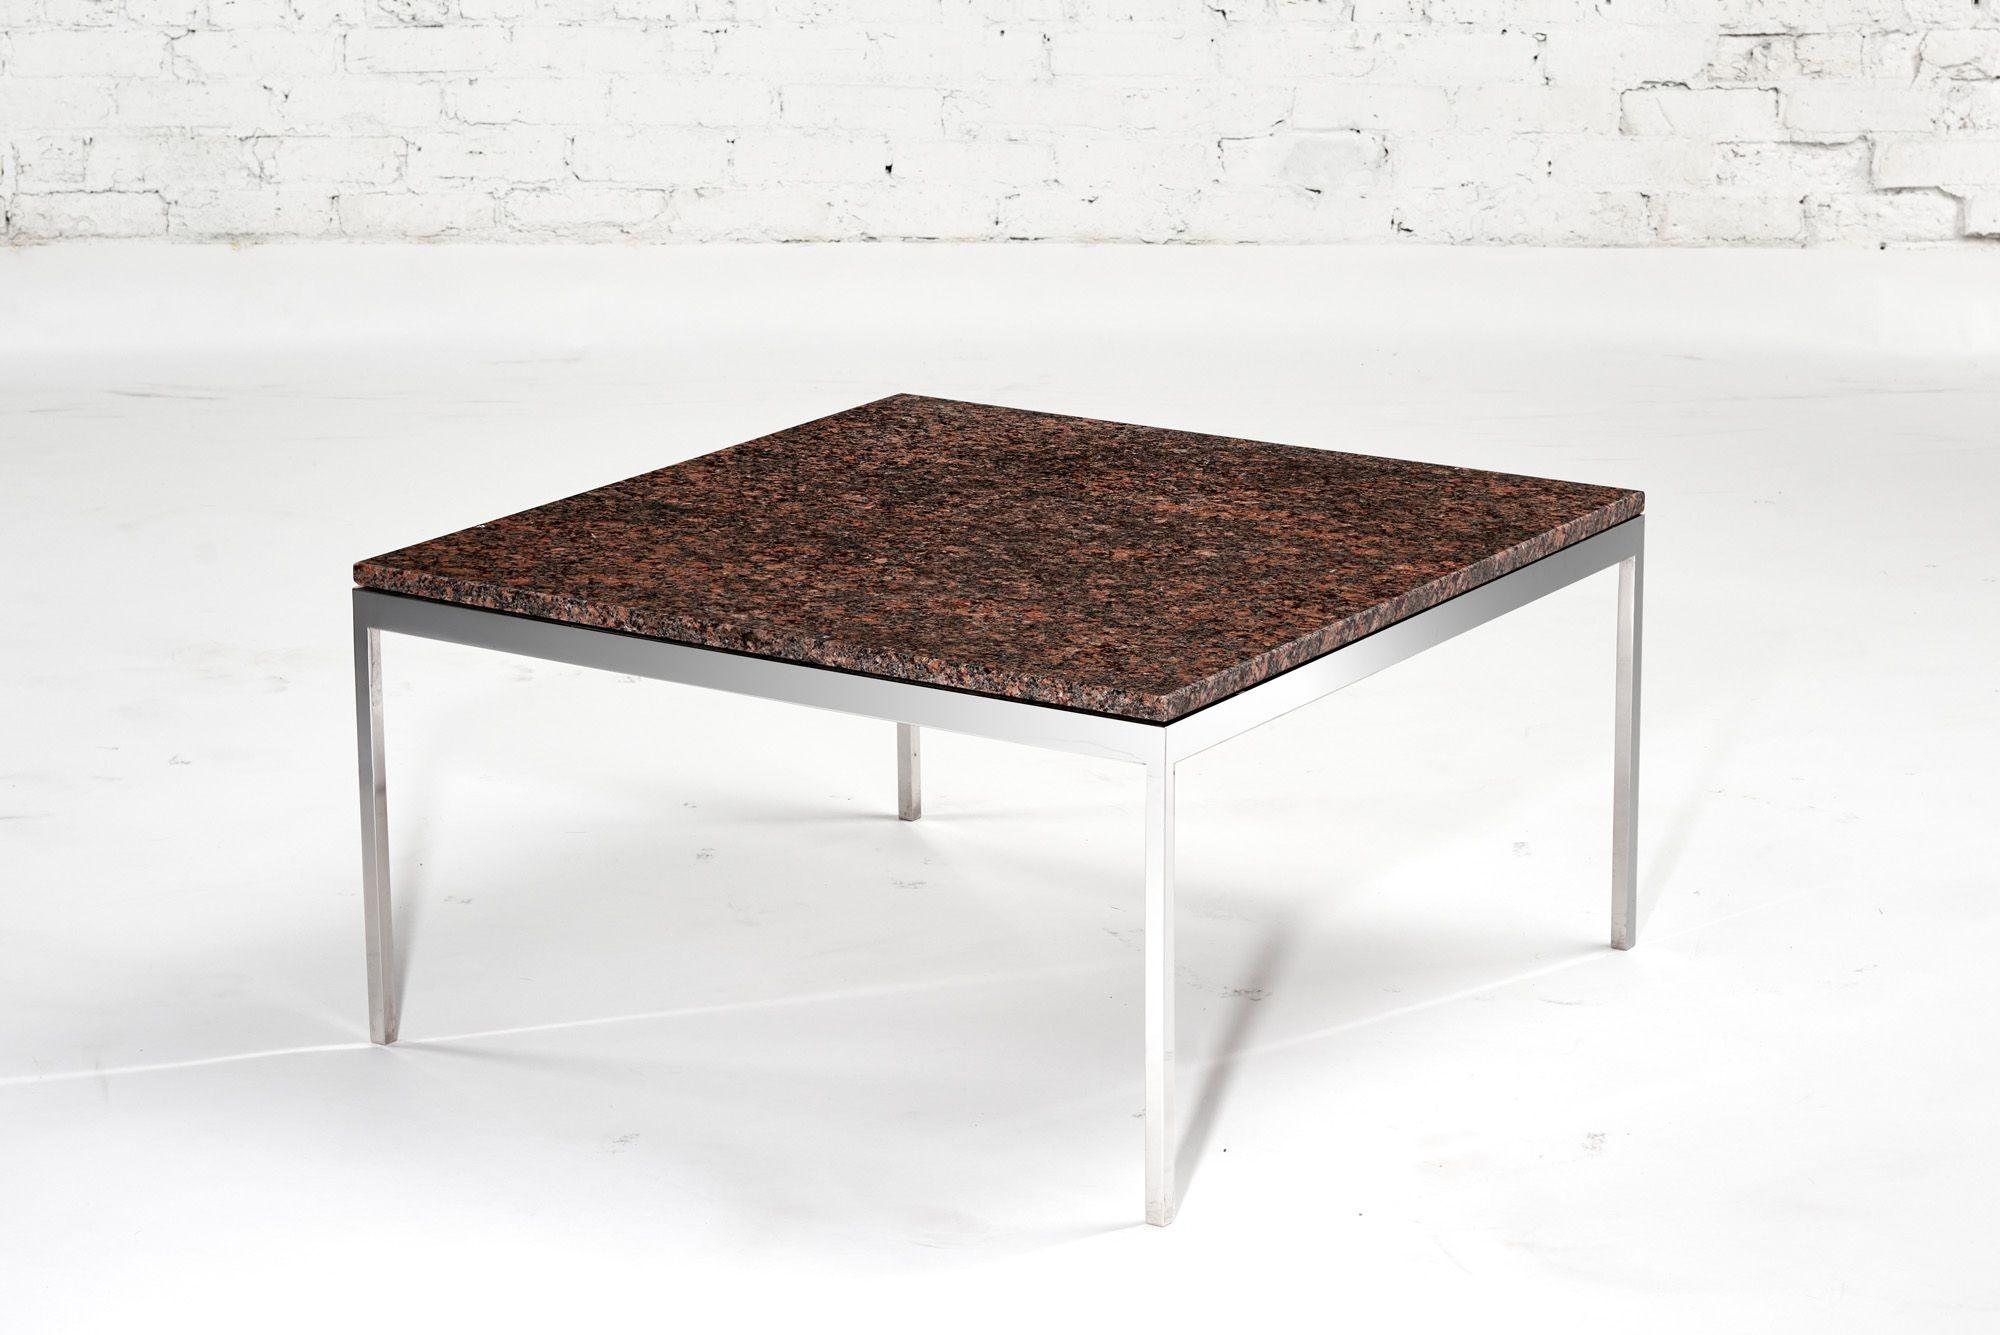 Nicos Zographos brown granite and stainless steel coffee table, 1970. Original.